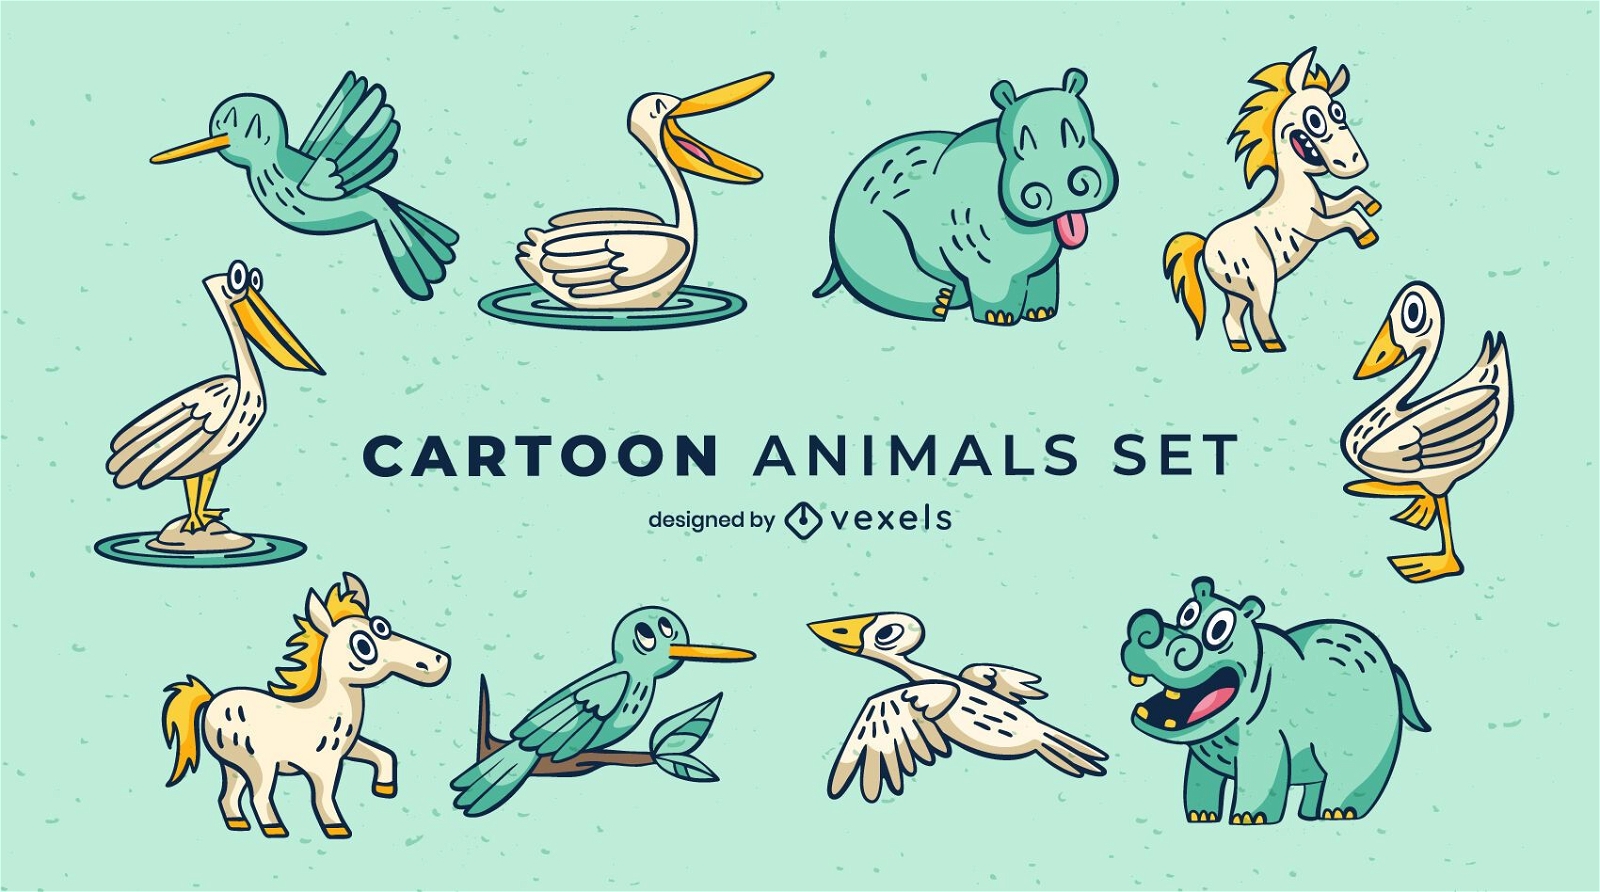 Cartoon animals funny set